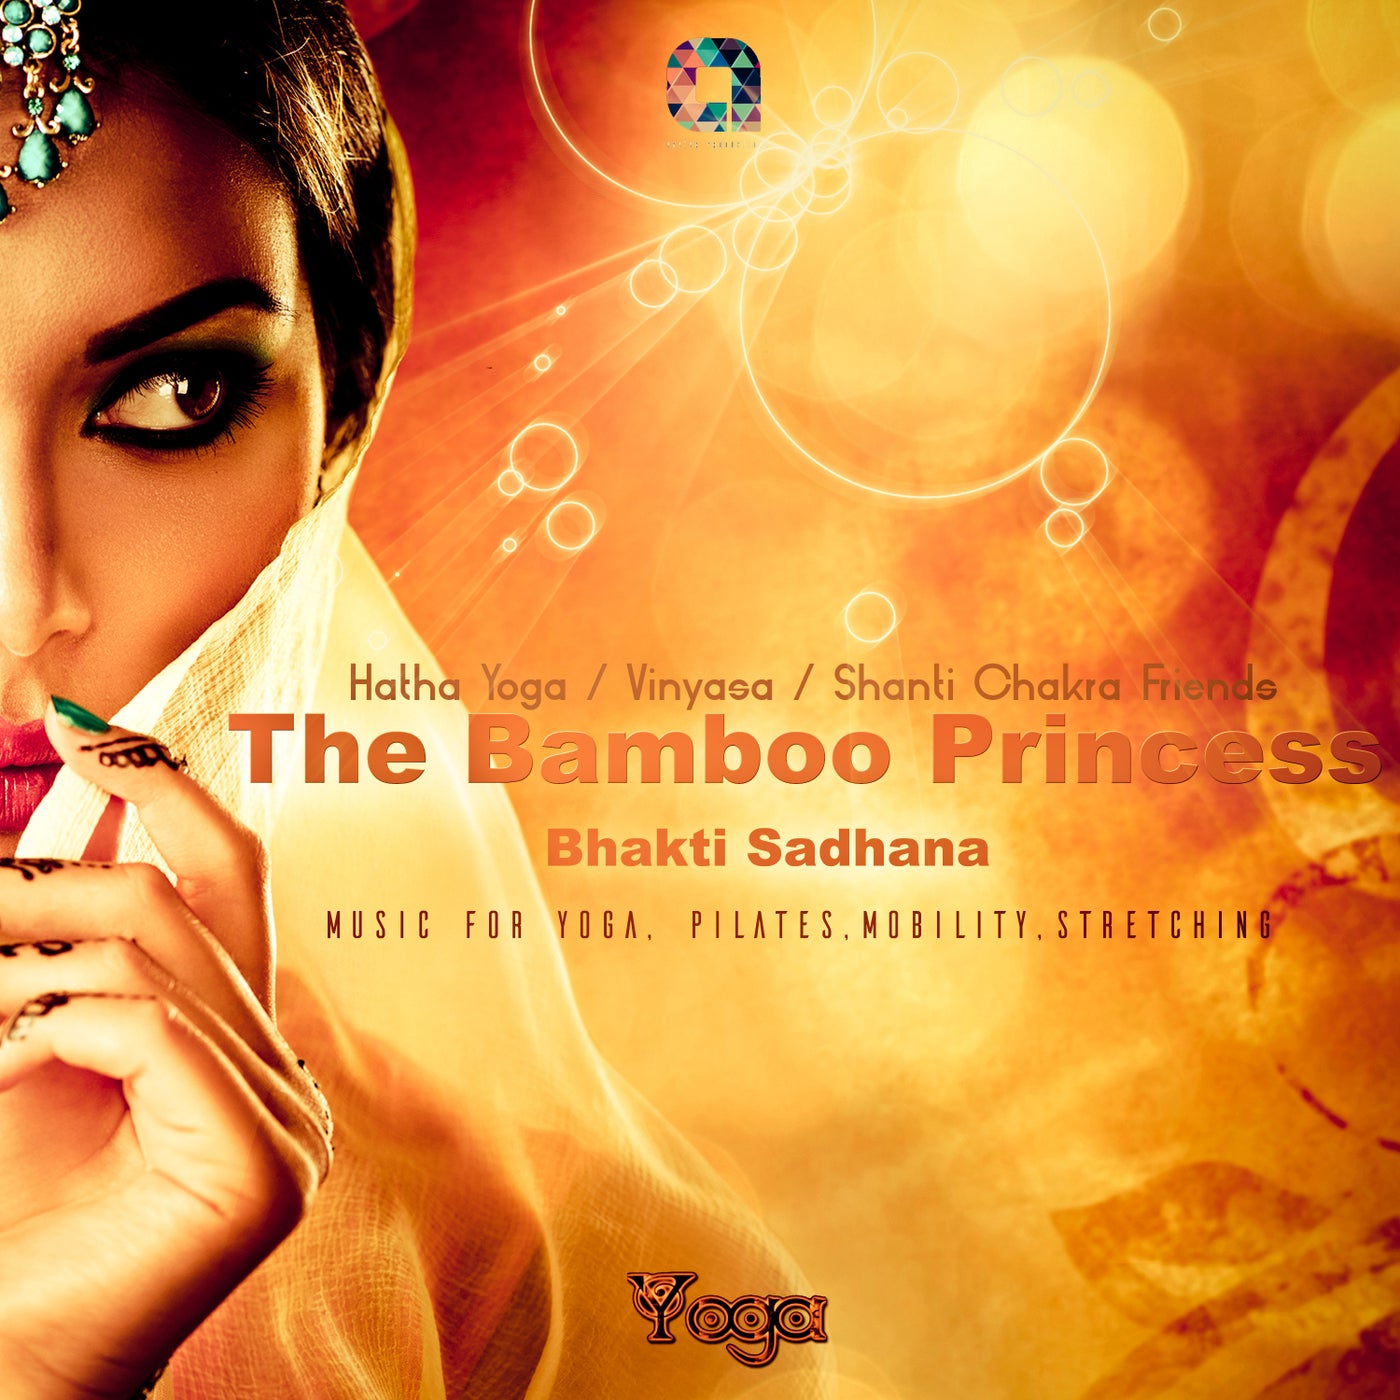 The Bamboo Princess (Bhakti Sadhana) [Music for Yoga, Pilates, Mobility & Stretching]